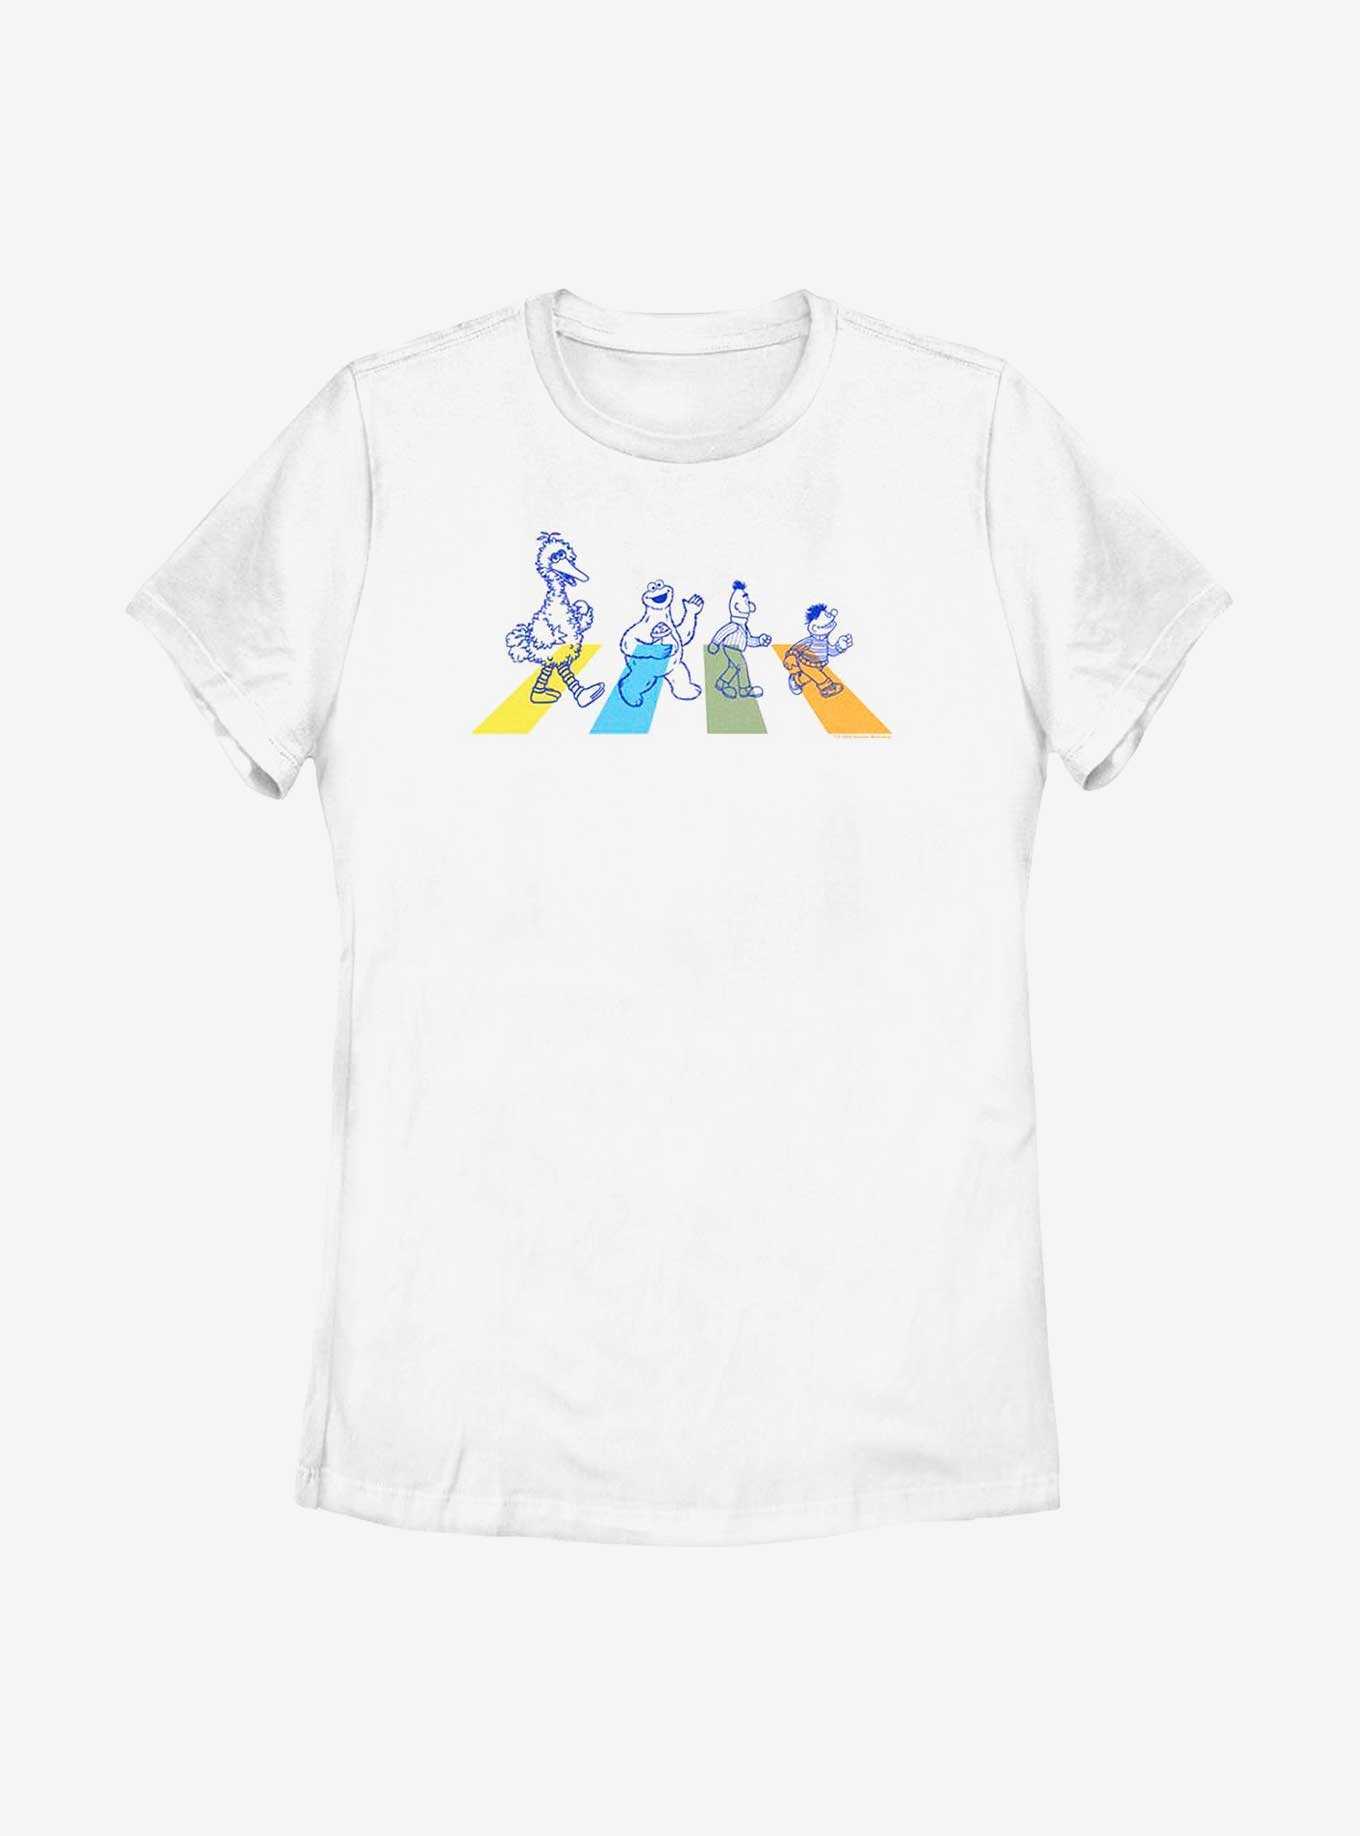 Sesame Street Team Abbey Road Womens T-Shirt, , hi-res